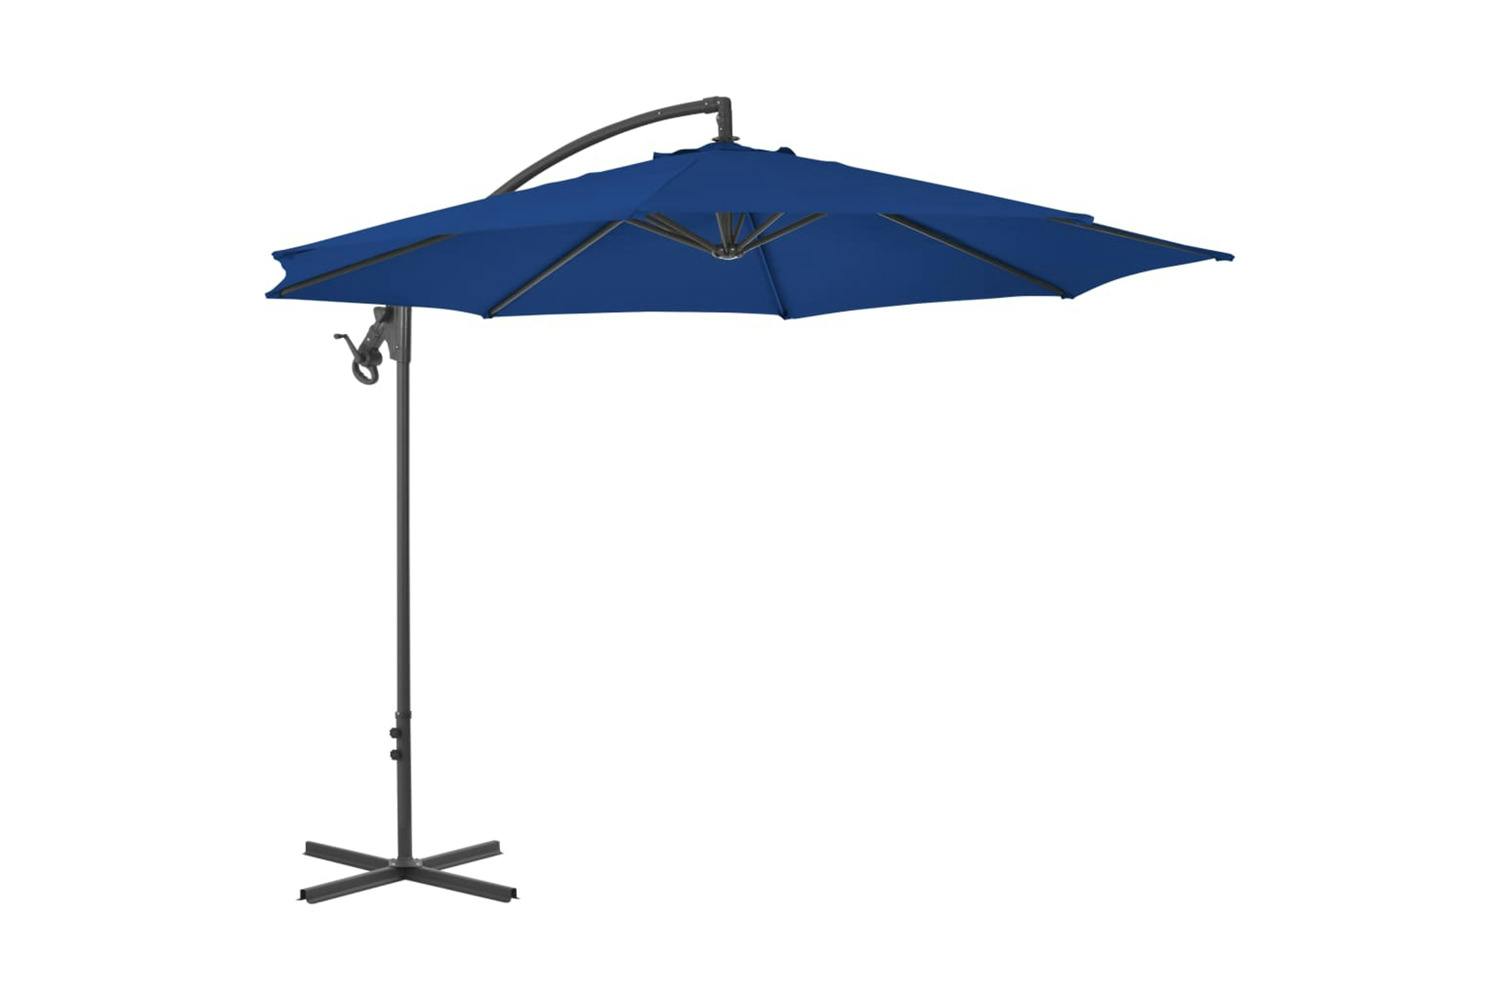 Vidaxl 312509 Cantilever Umbrella With Steel Pole 300 Cm Azure Blue